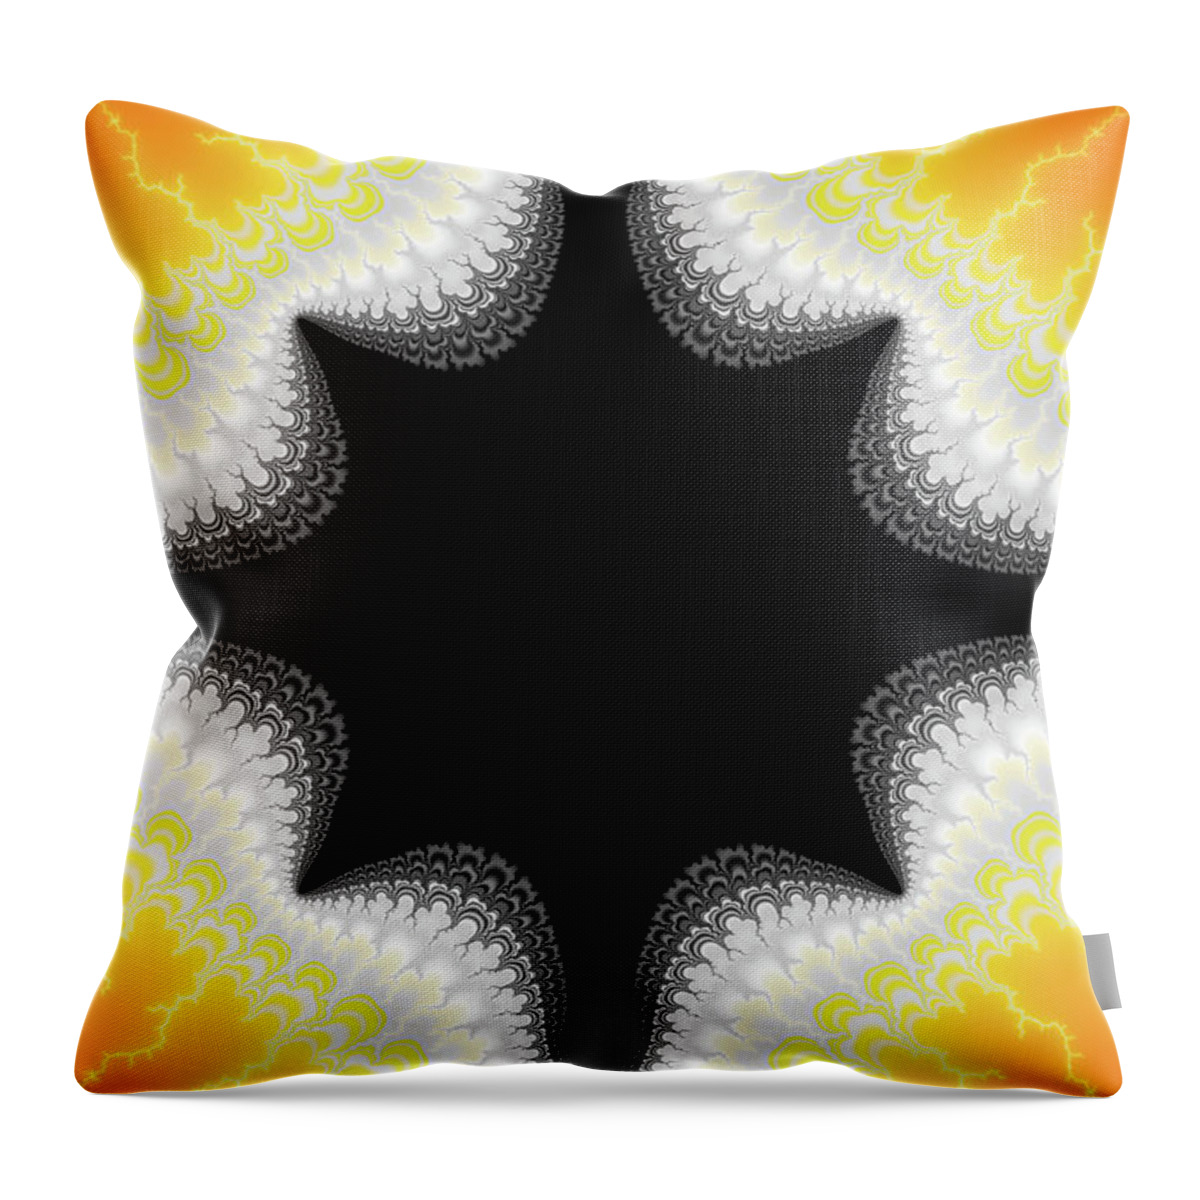 Fractal Throw Pillow featuring the digital art Fractal 7 center 2x3 by Daniel George